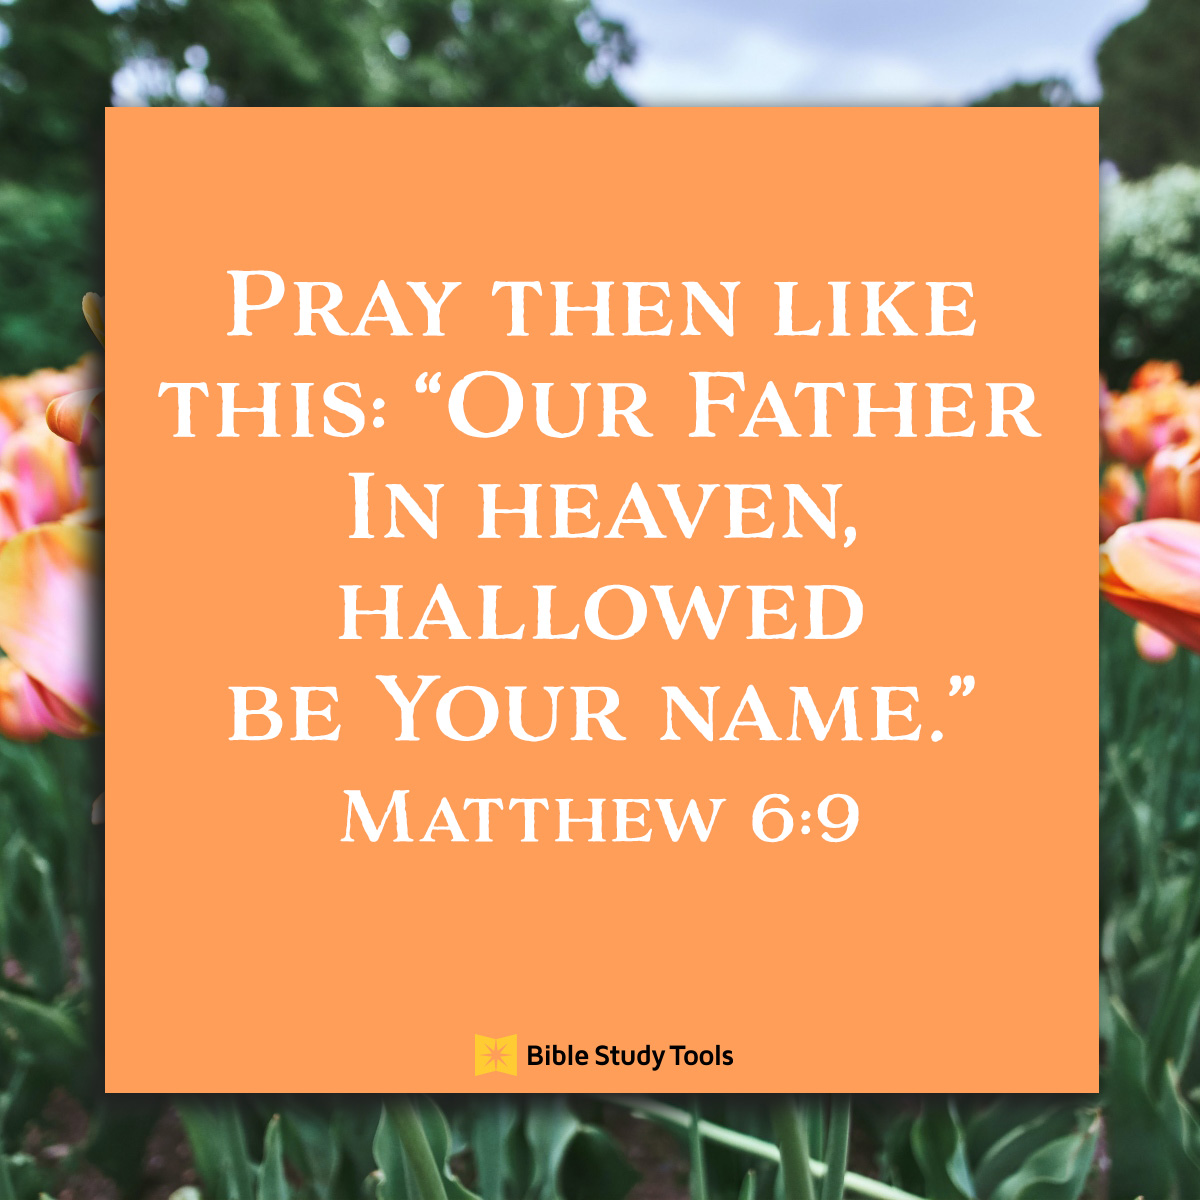 Matthew 6:9, inspirational image